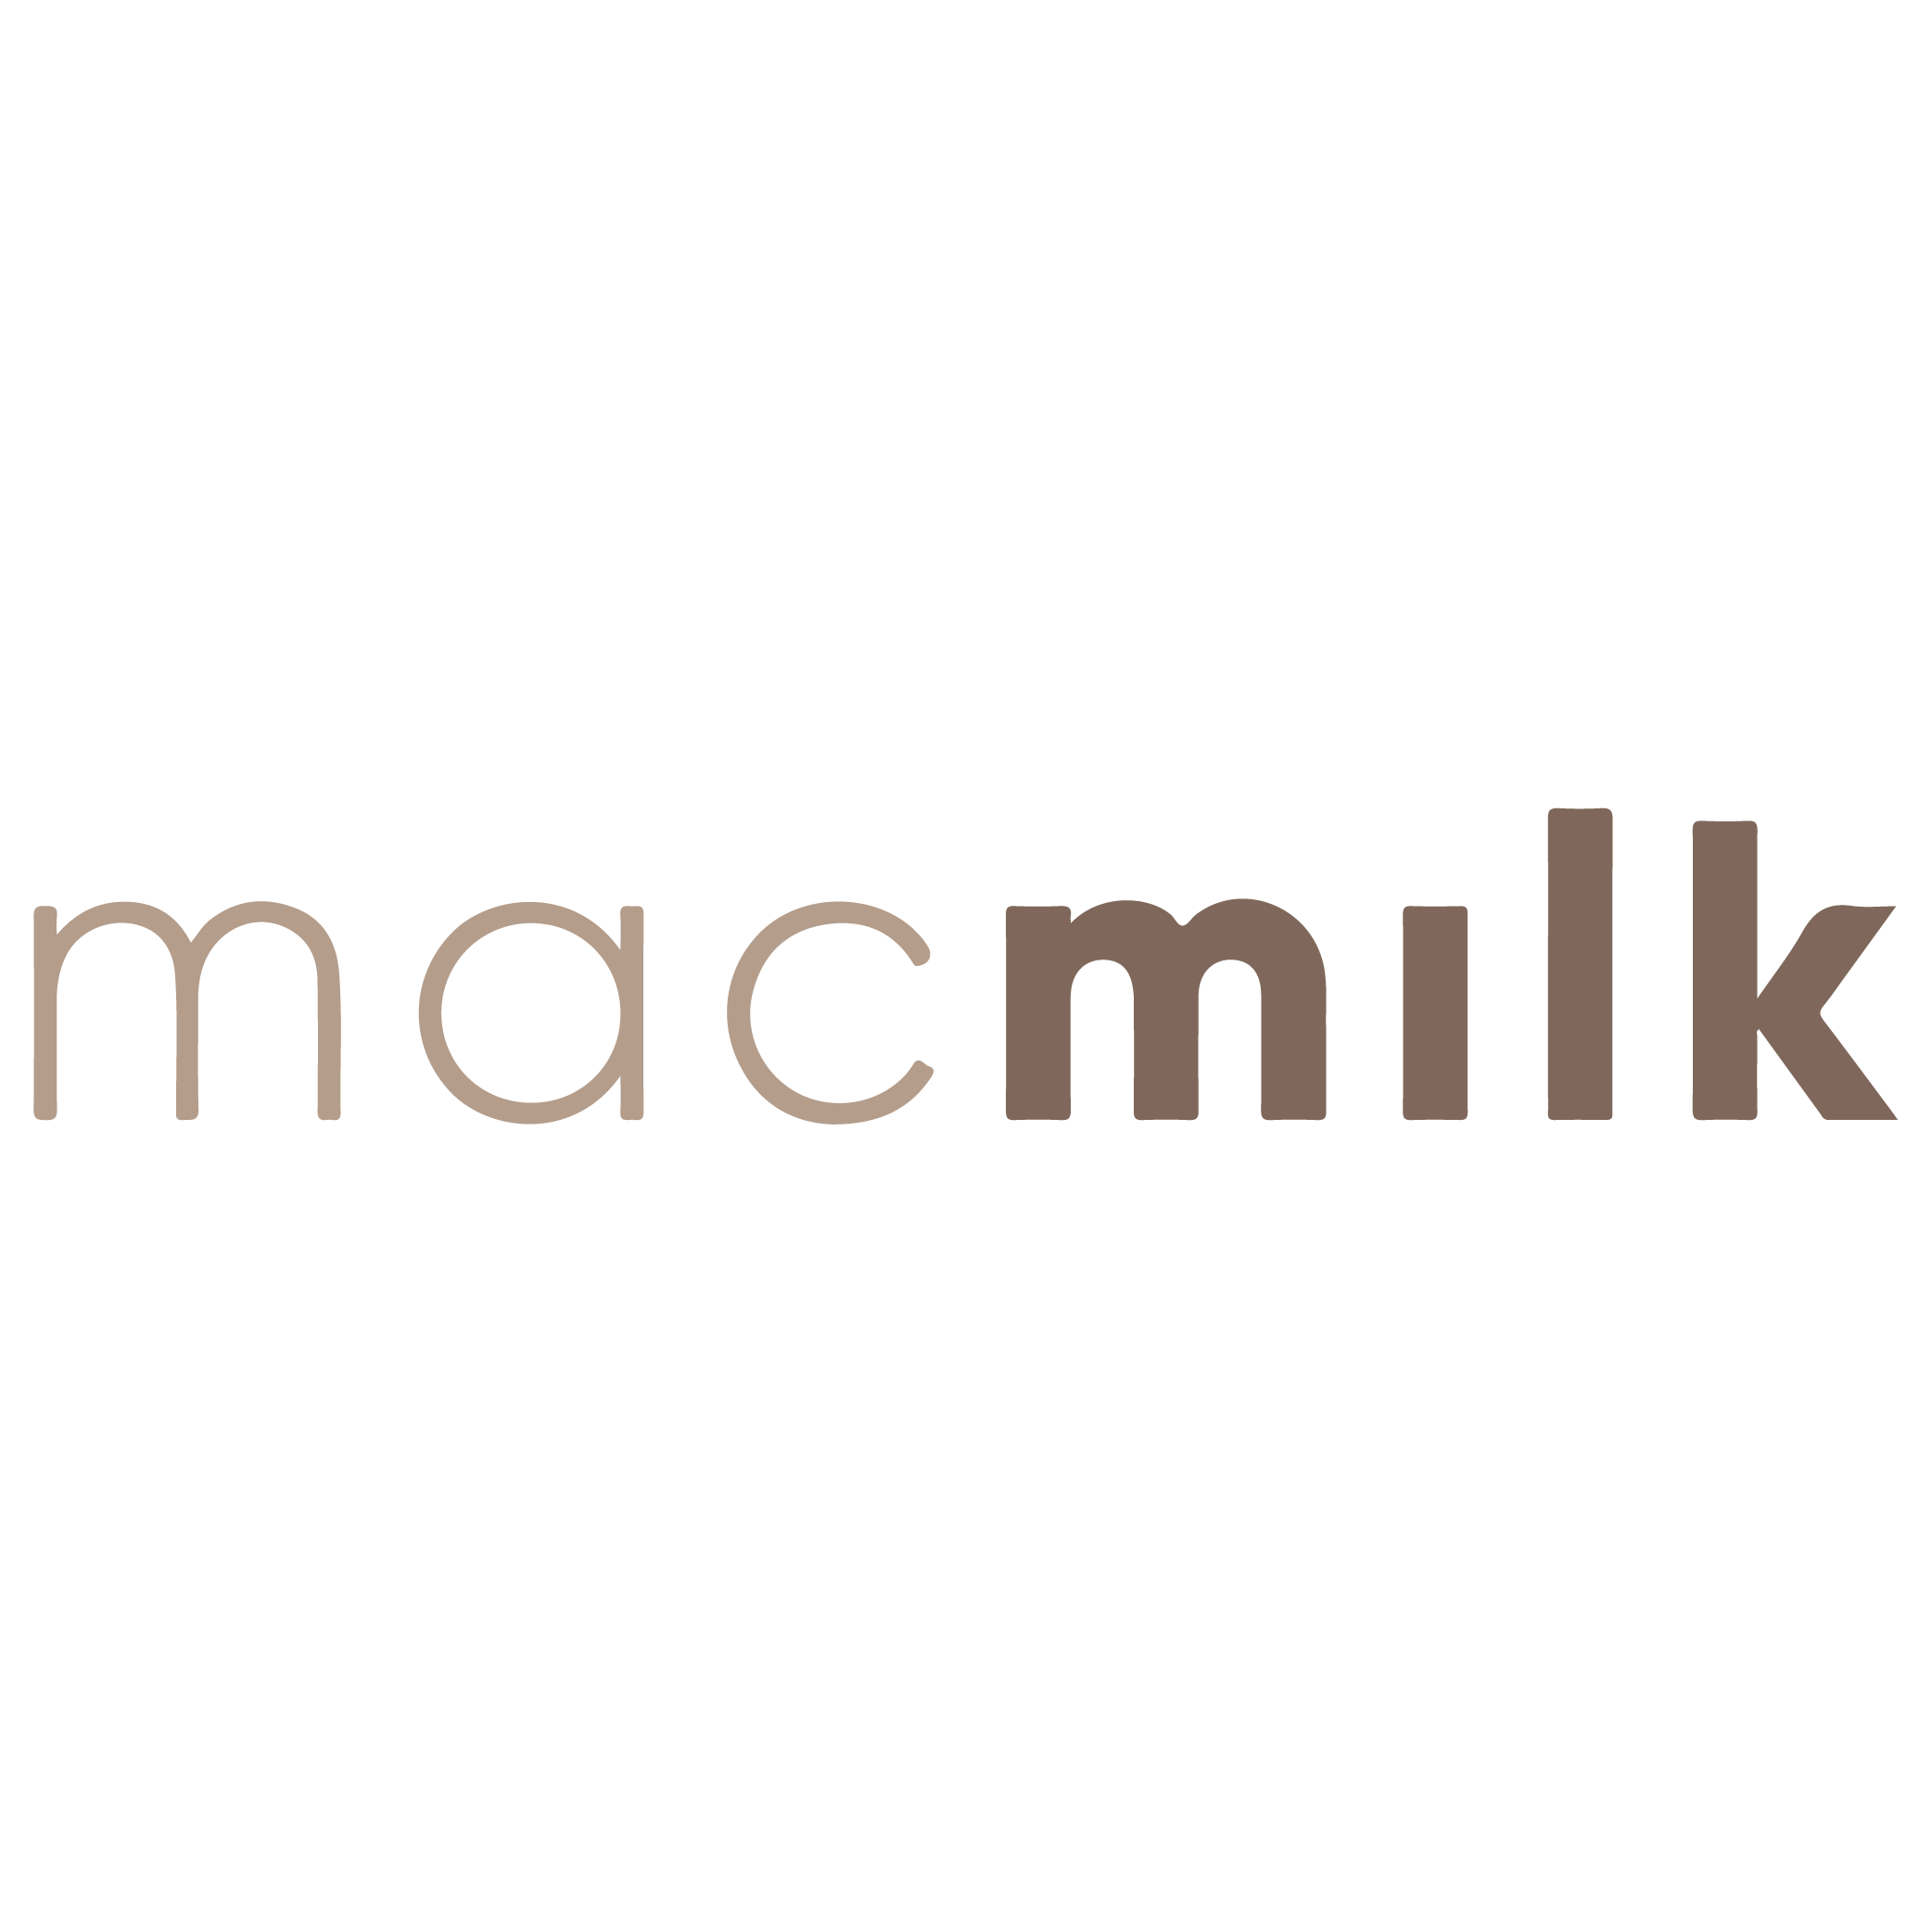 macmilk logo